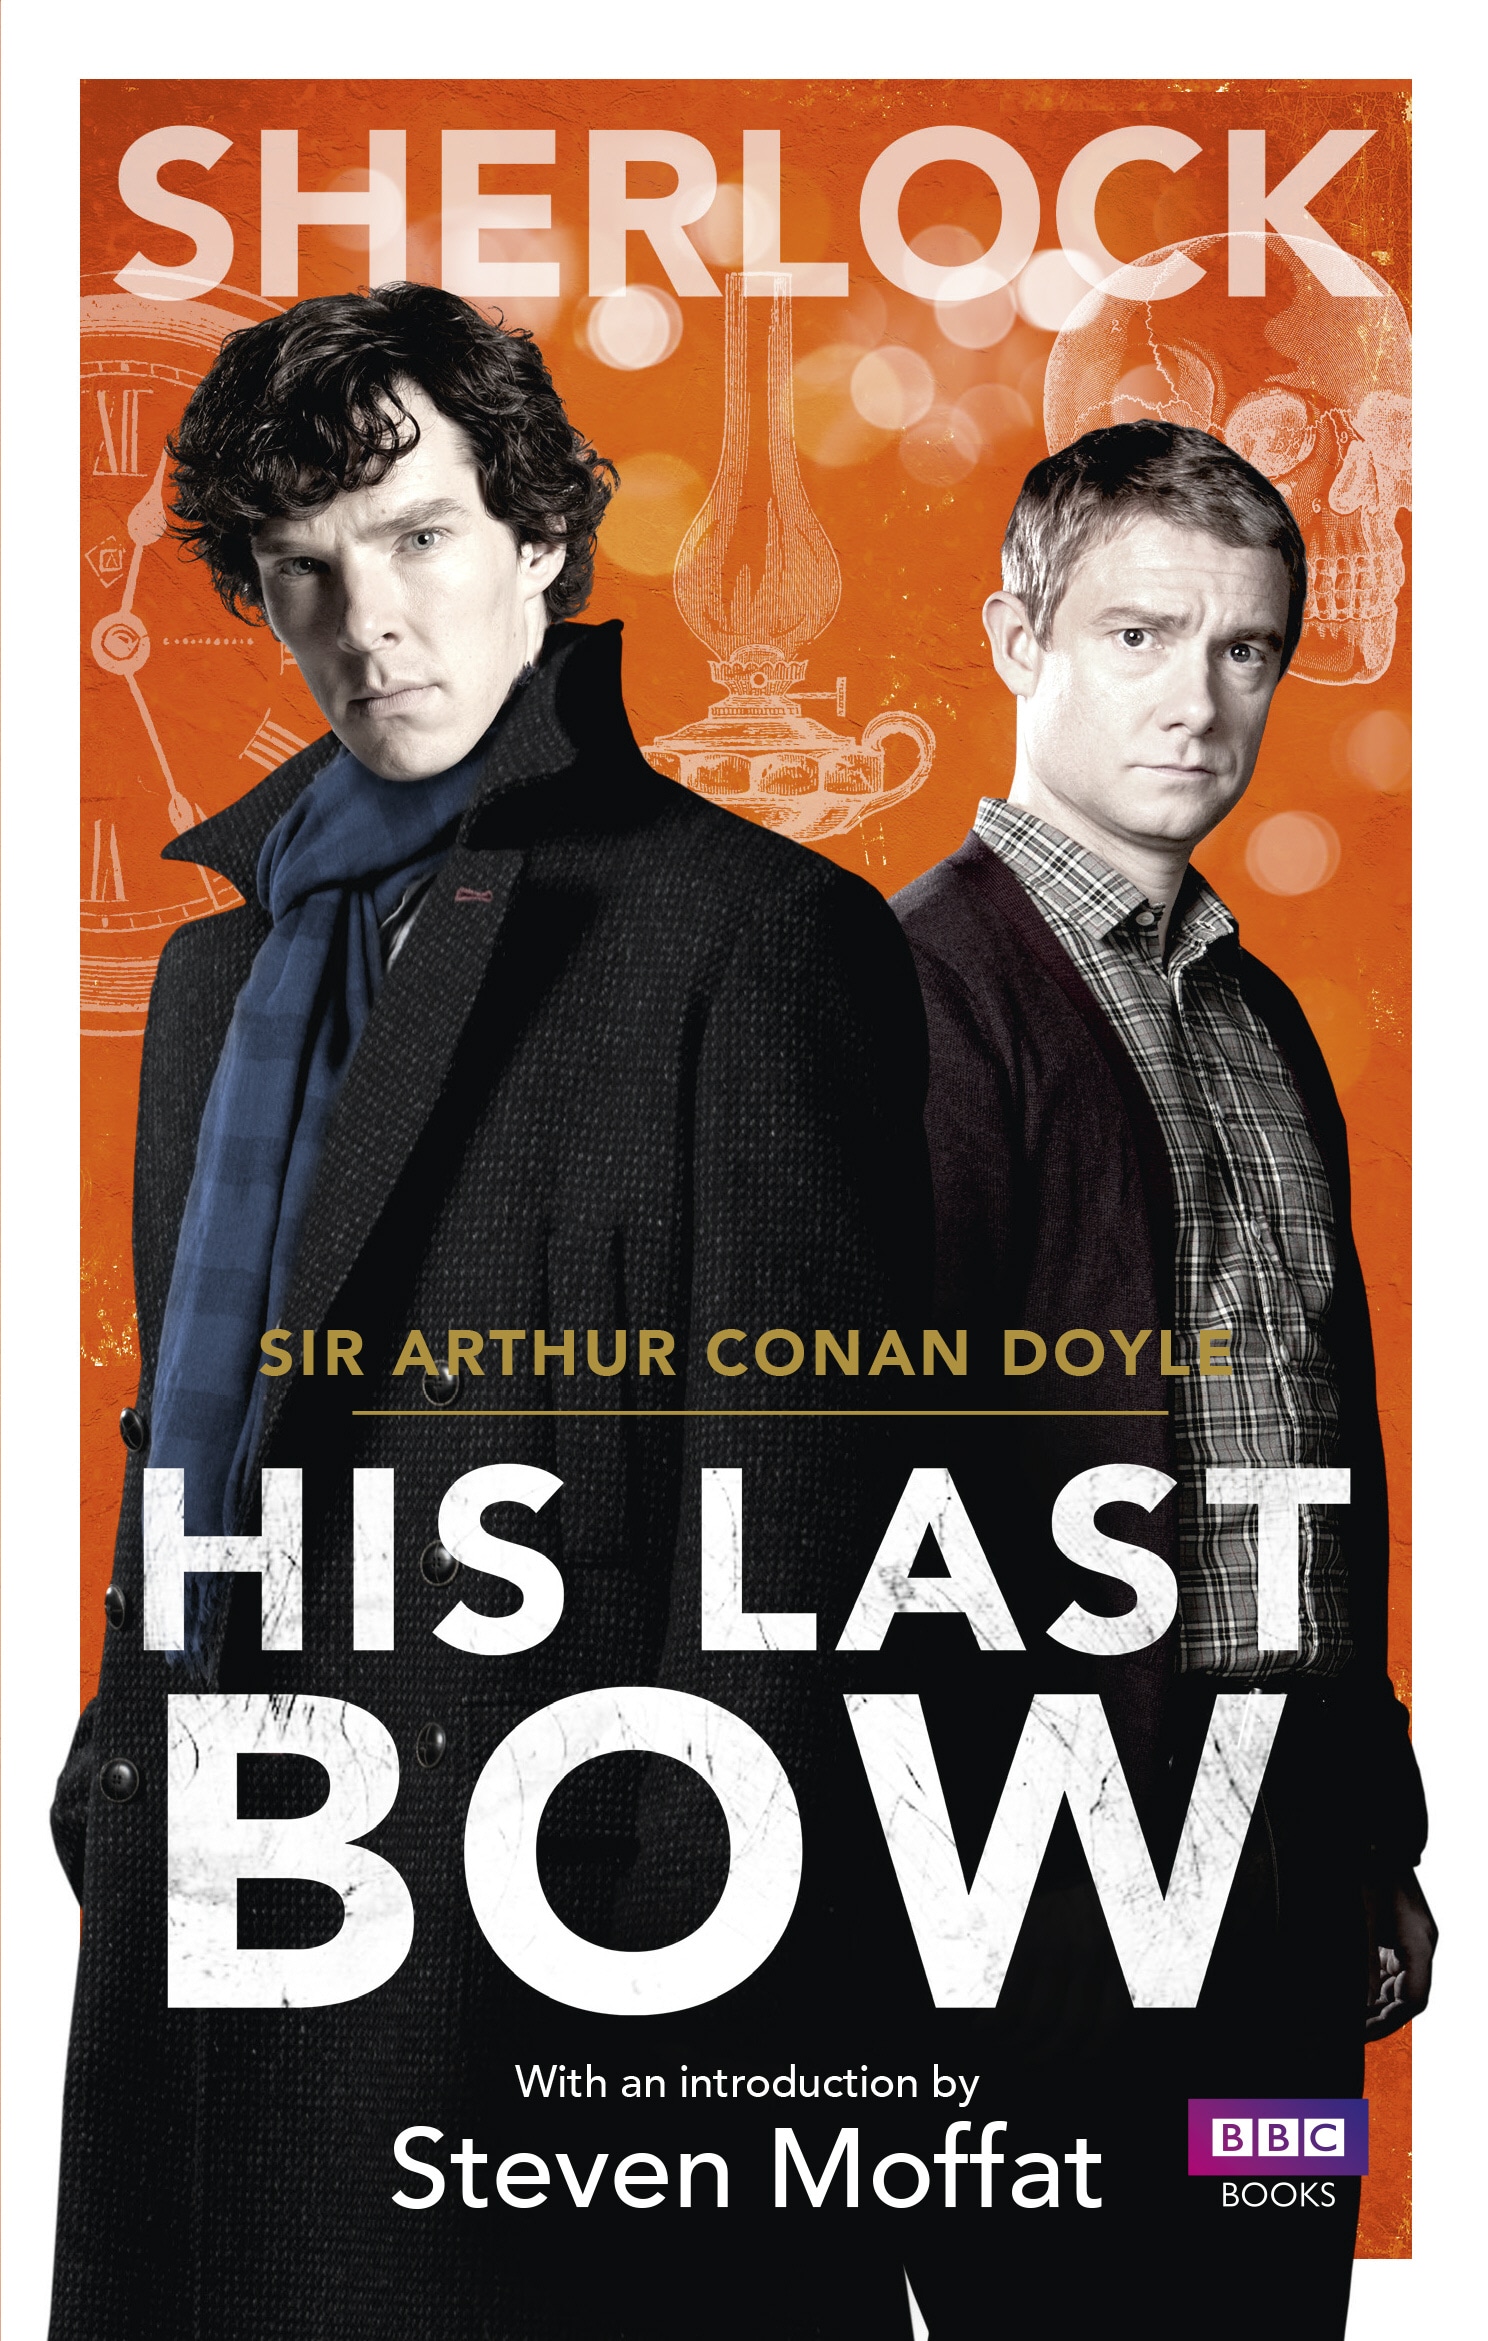 Book “Sherlock: His Last Bow” by Arthur Conan Doyle — December 5, 2013